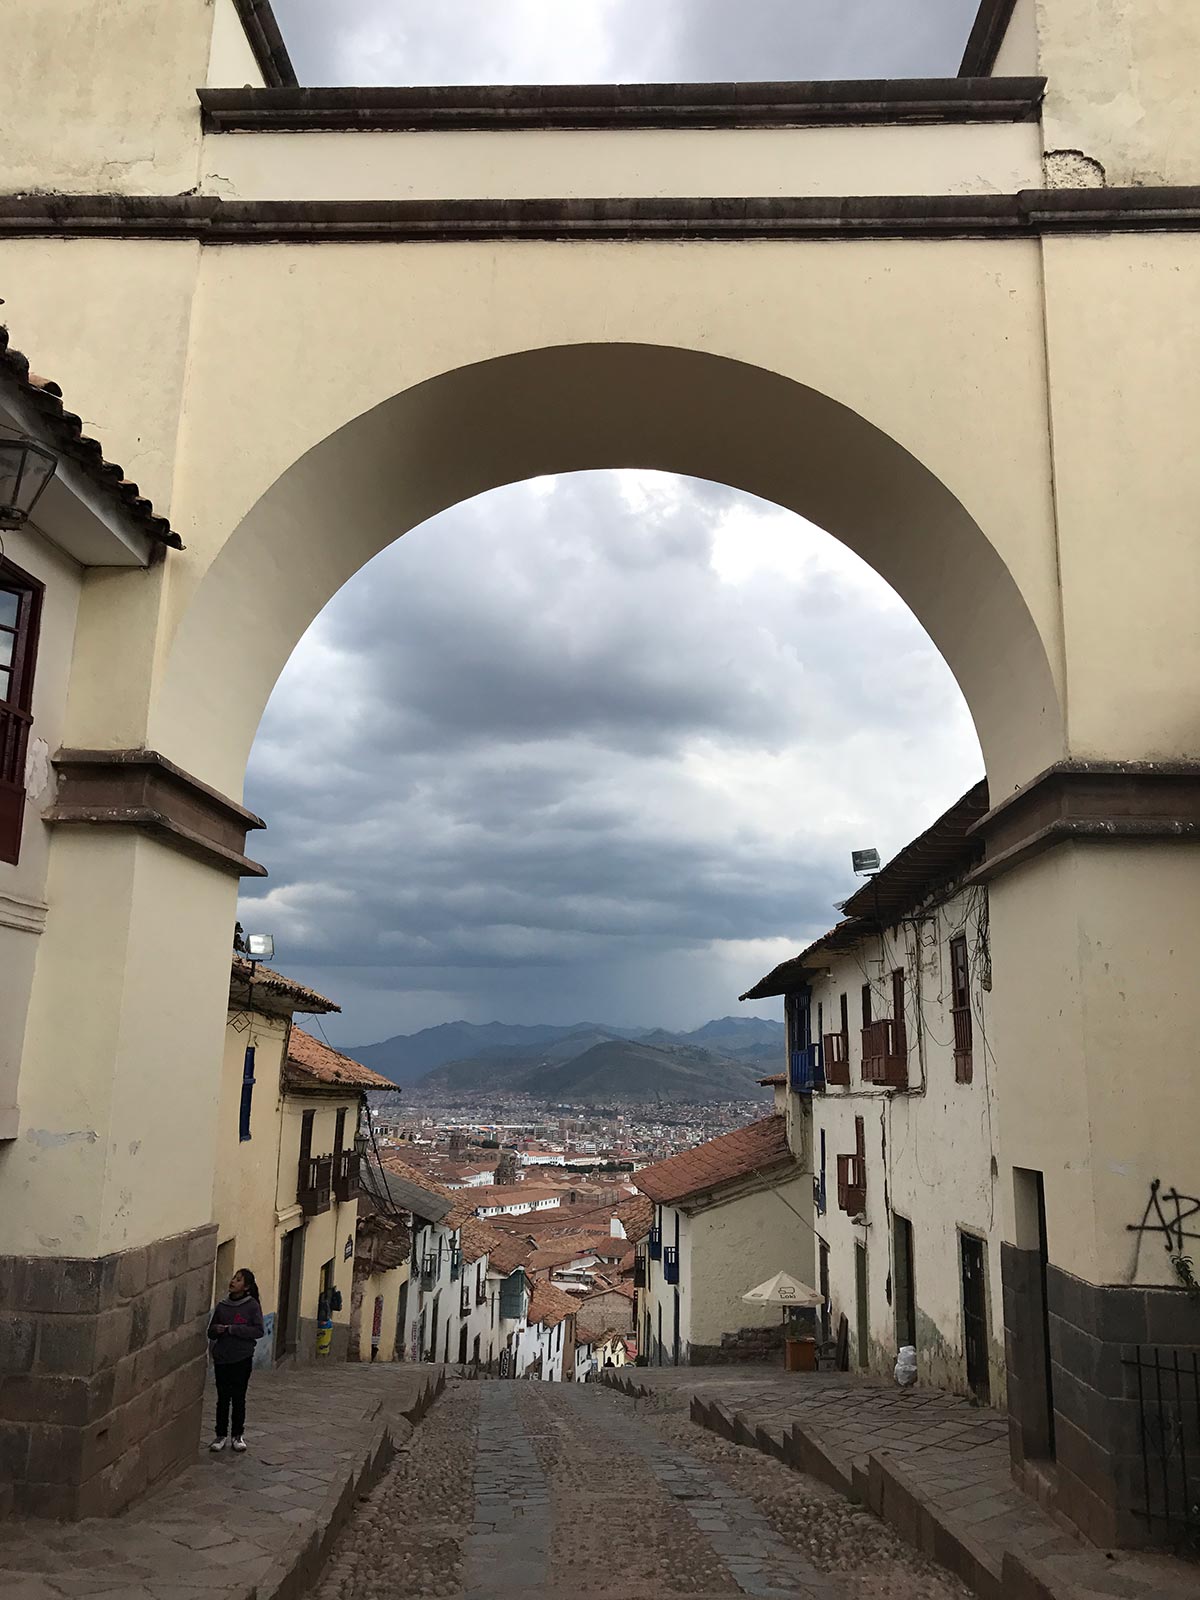 Arch on a street in Cusco, Peru. Getting robbed by Police in Peru